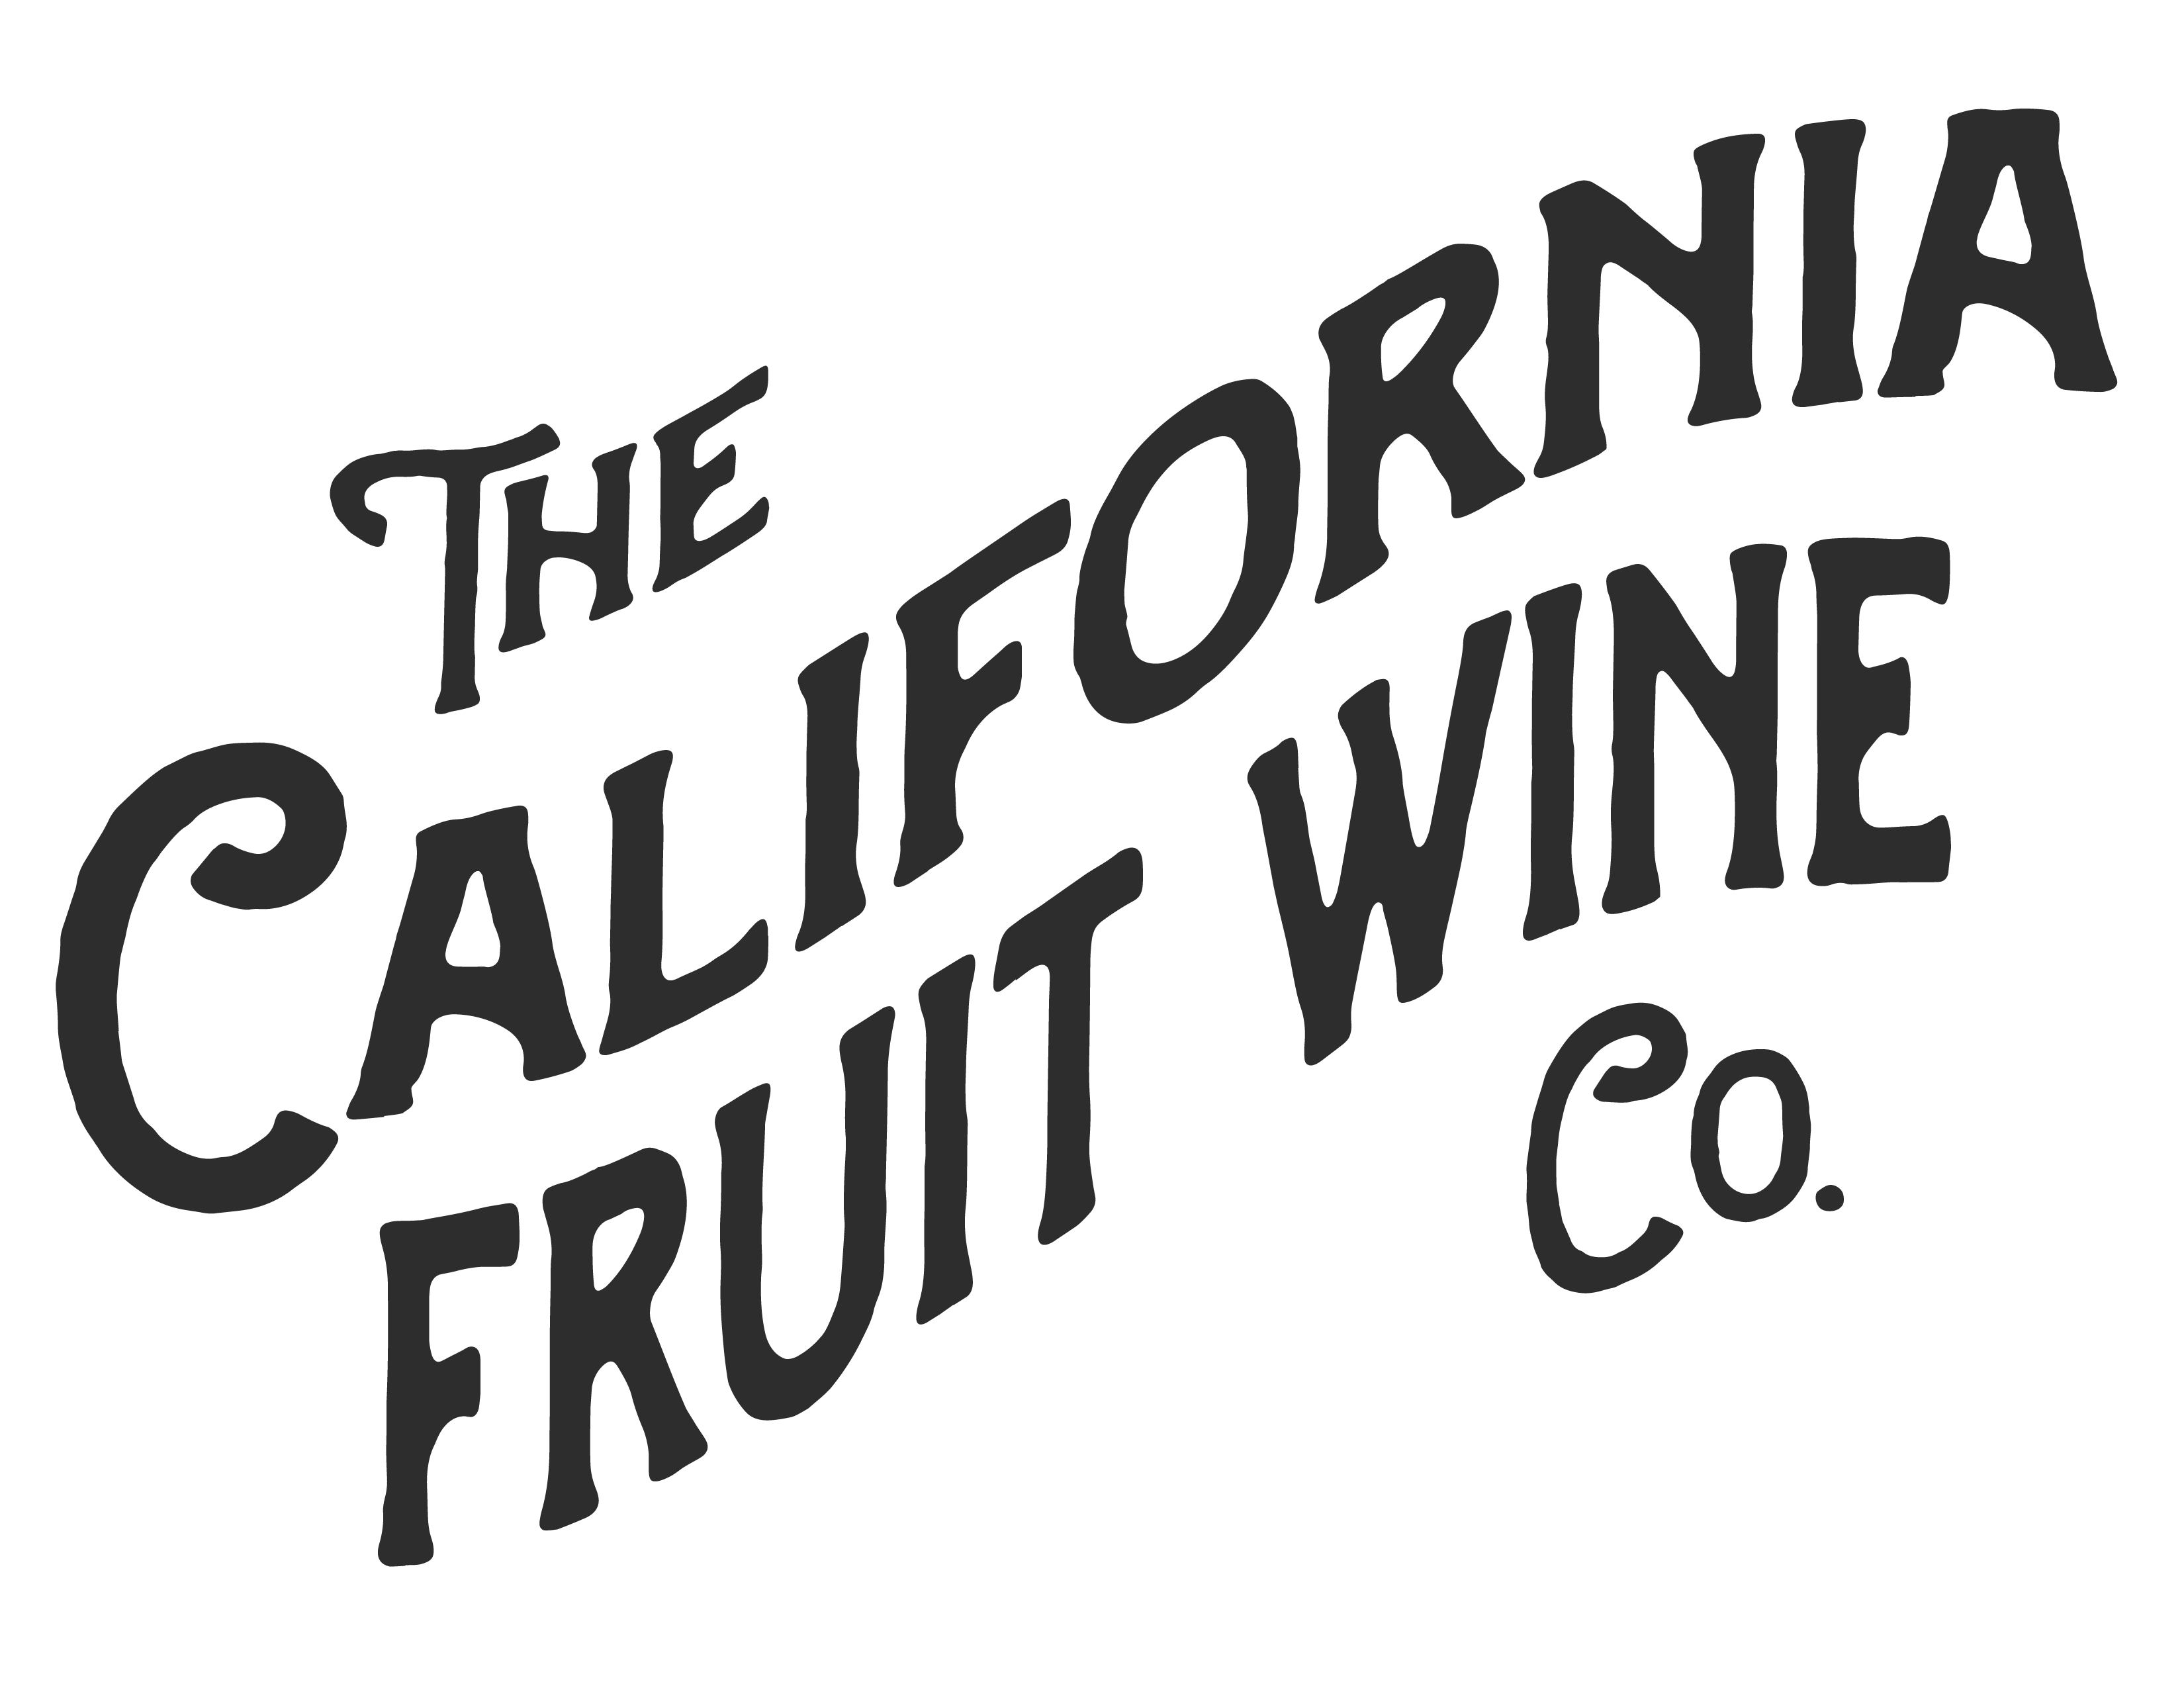 White Fruit Logo - Logos. The California Fruit Wine Company